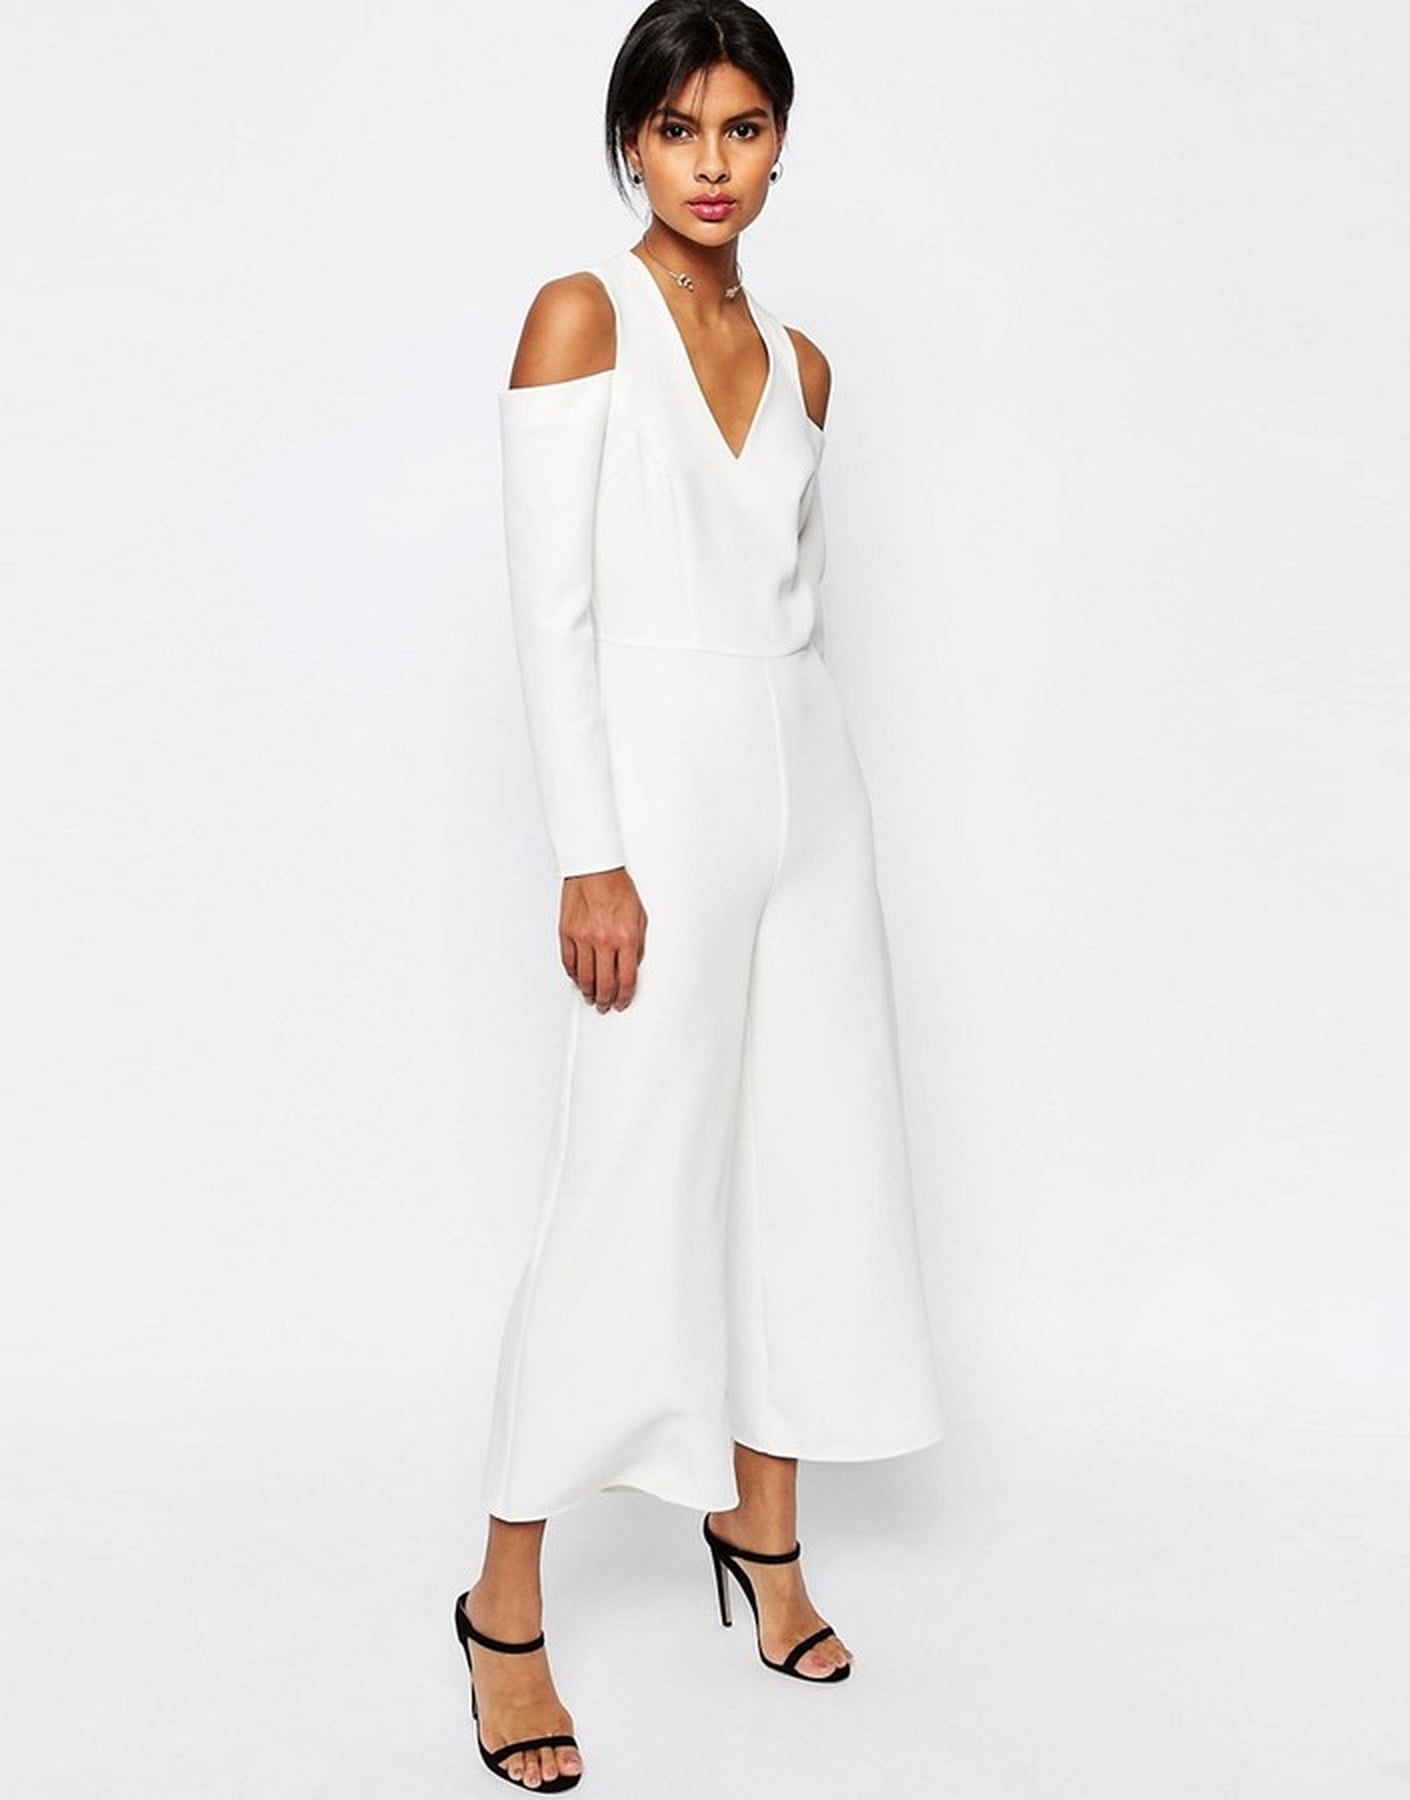 White Dresses For Your Wedding Weekend | POPSUGAR Fashion